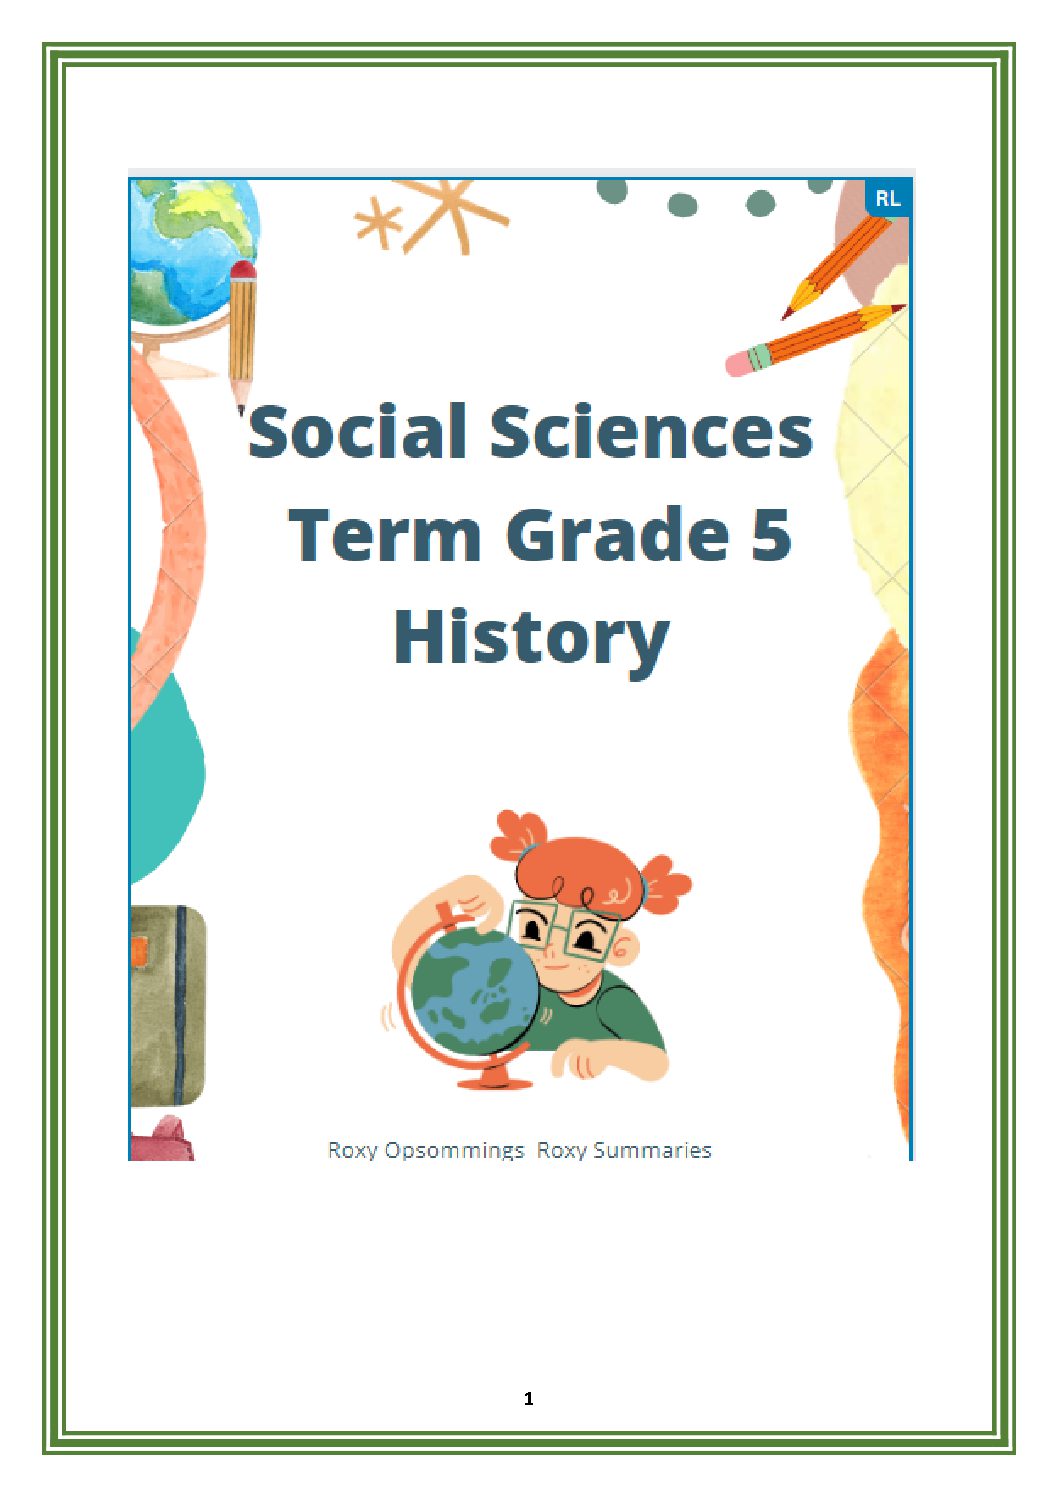 5th grade history research topics